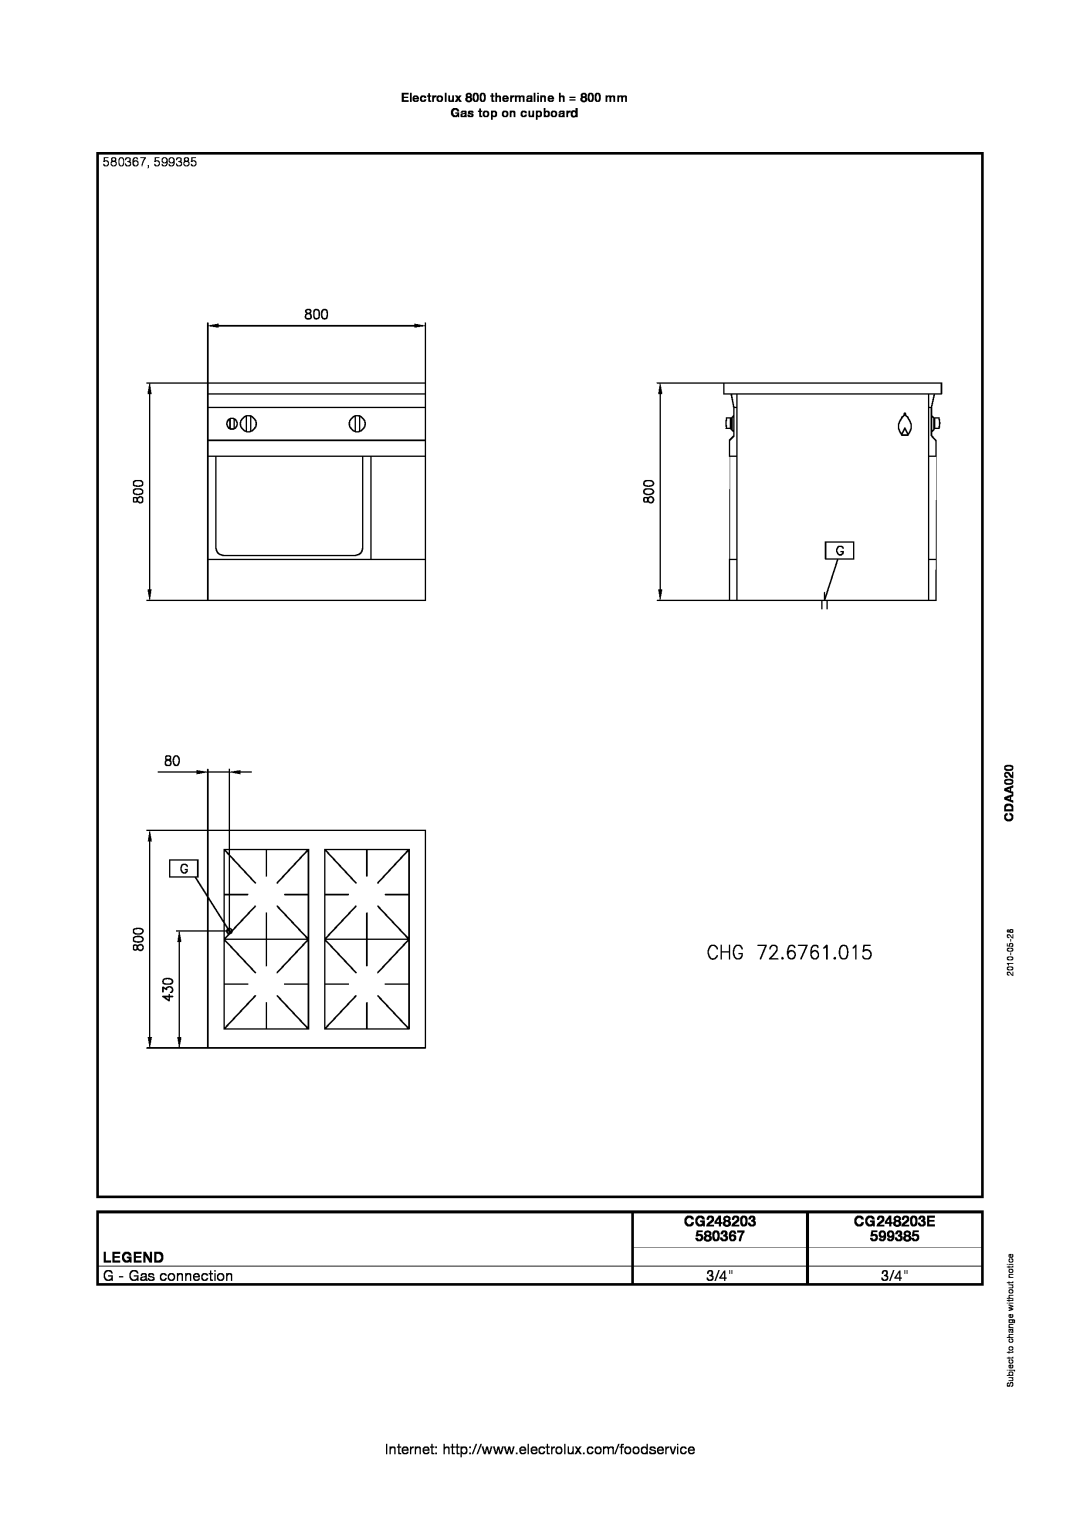 Electrolux manual 580367, Electrolux 800 thermaline h = 800 mm Gas top on cupboard, CDAA020, 2010-05-28 